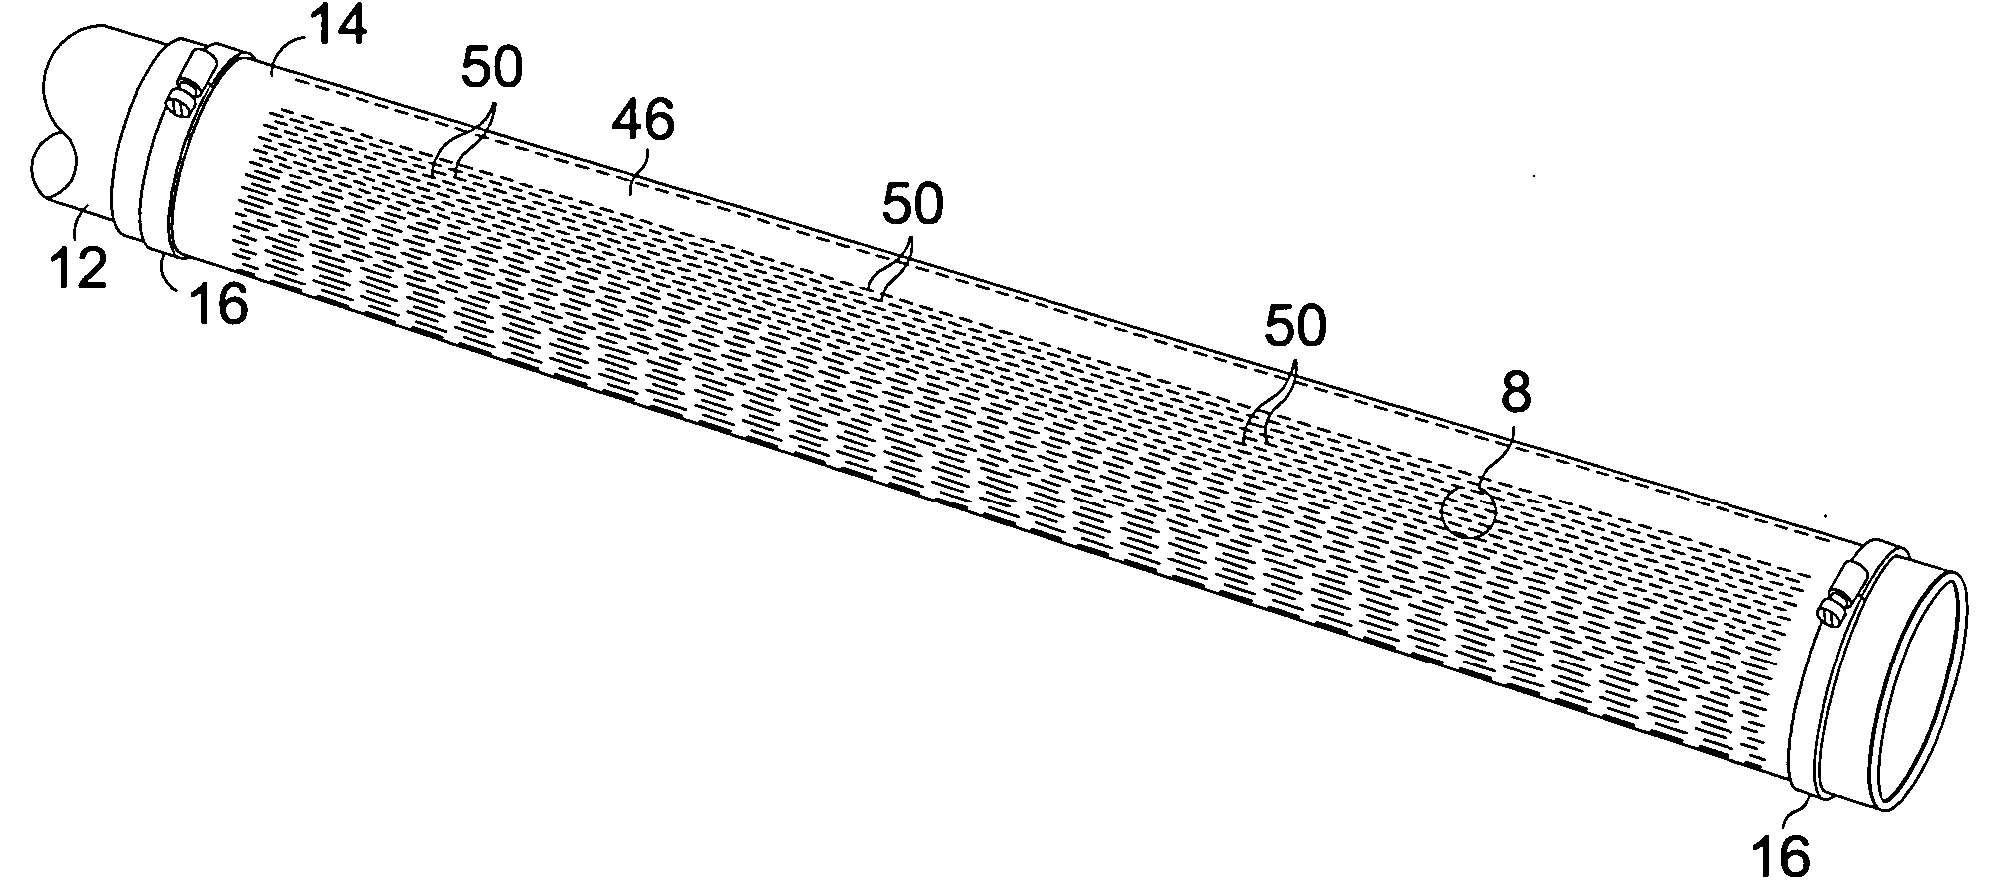 Membrane diffuser with uniform gas distribution